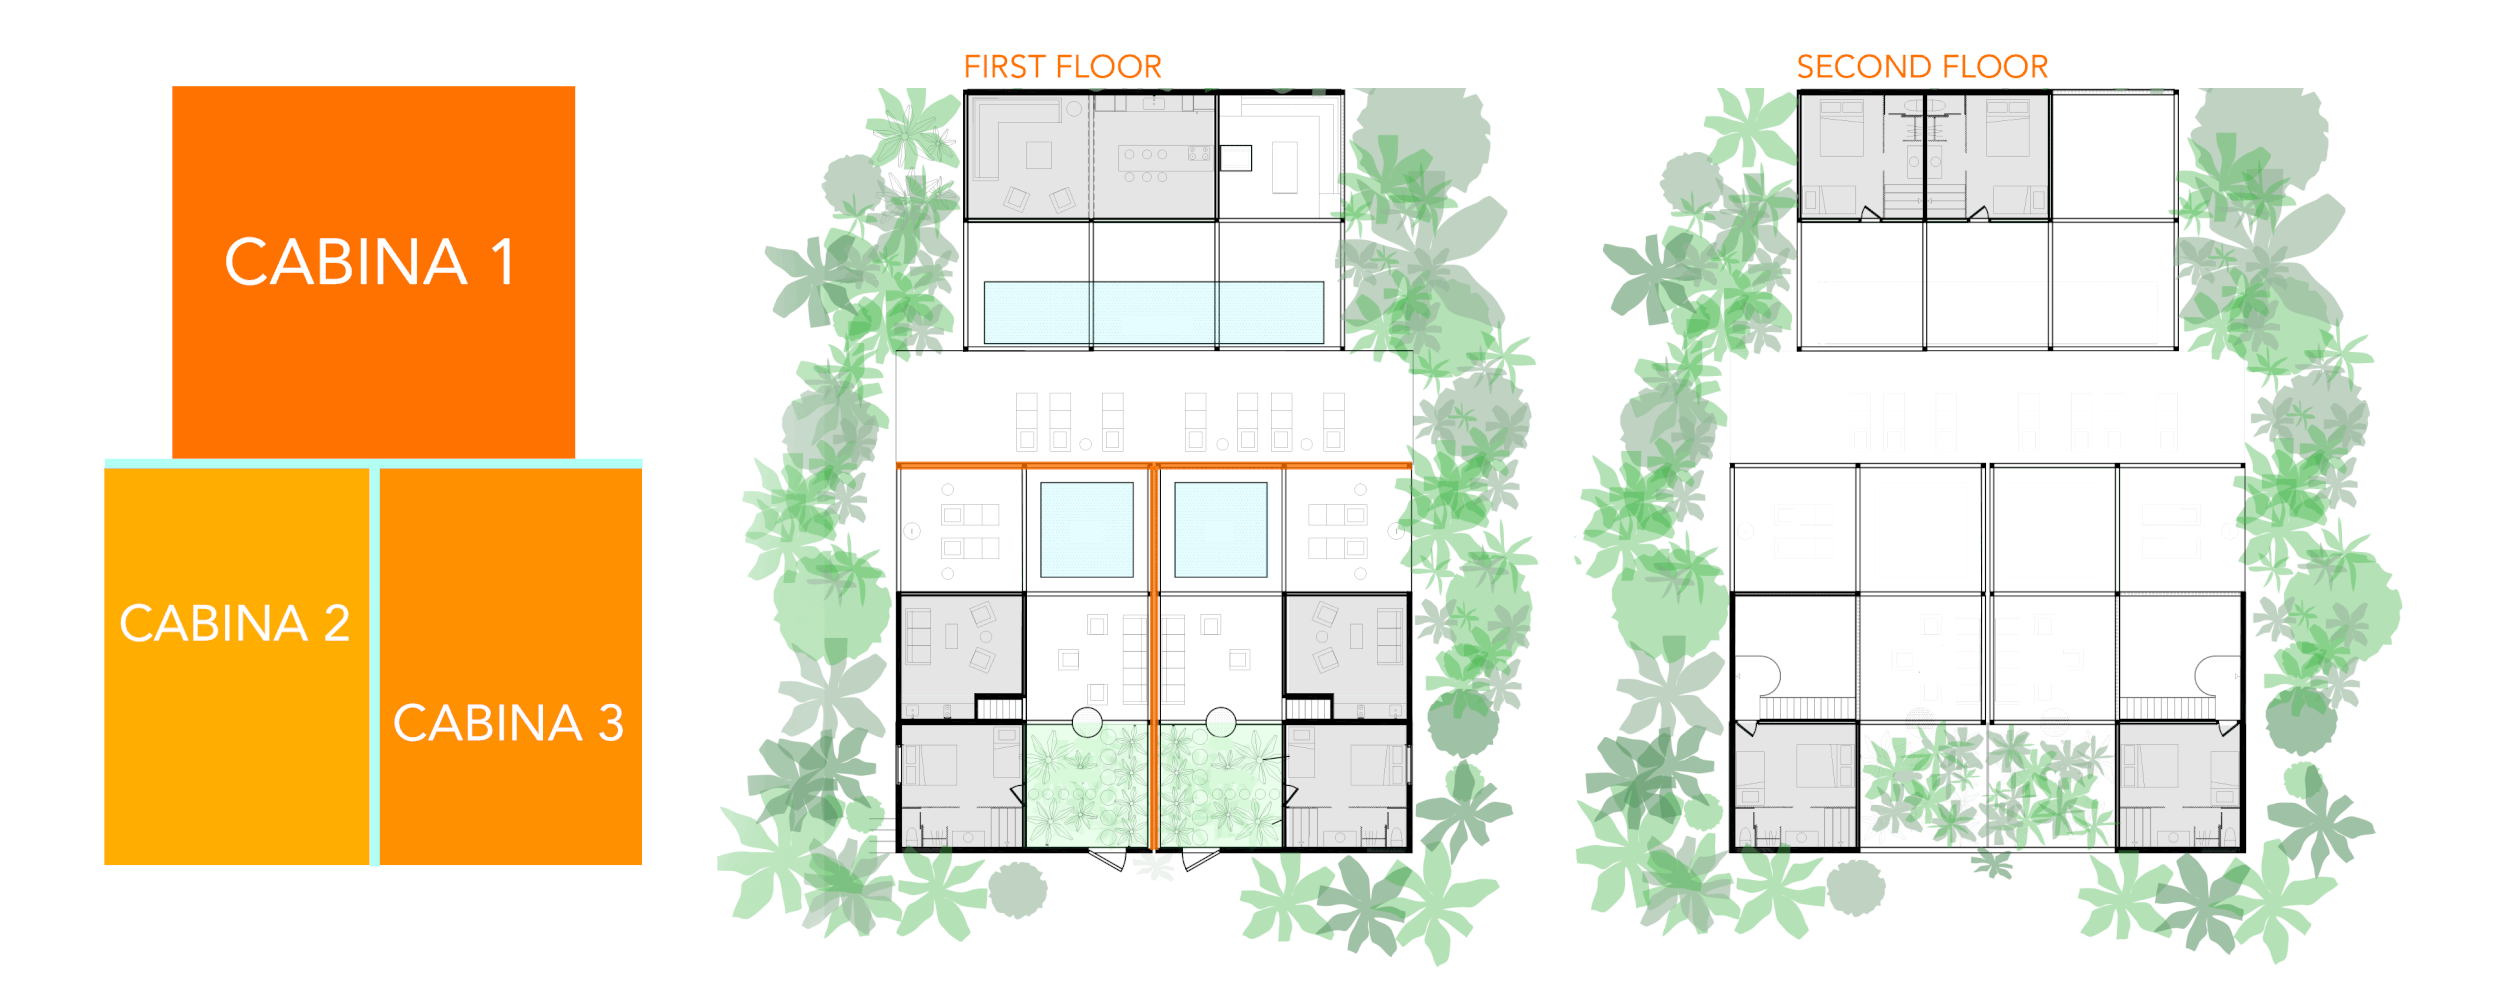 concept-gif-and-floor-plan.gif